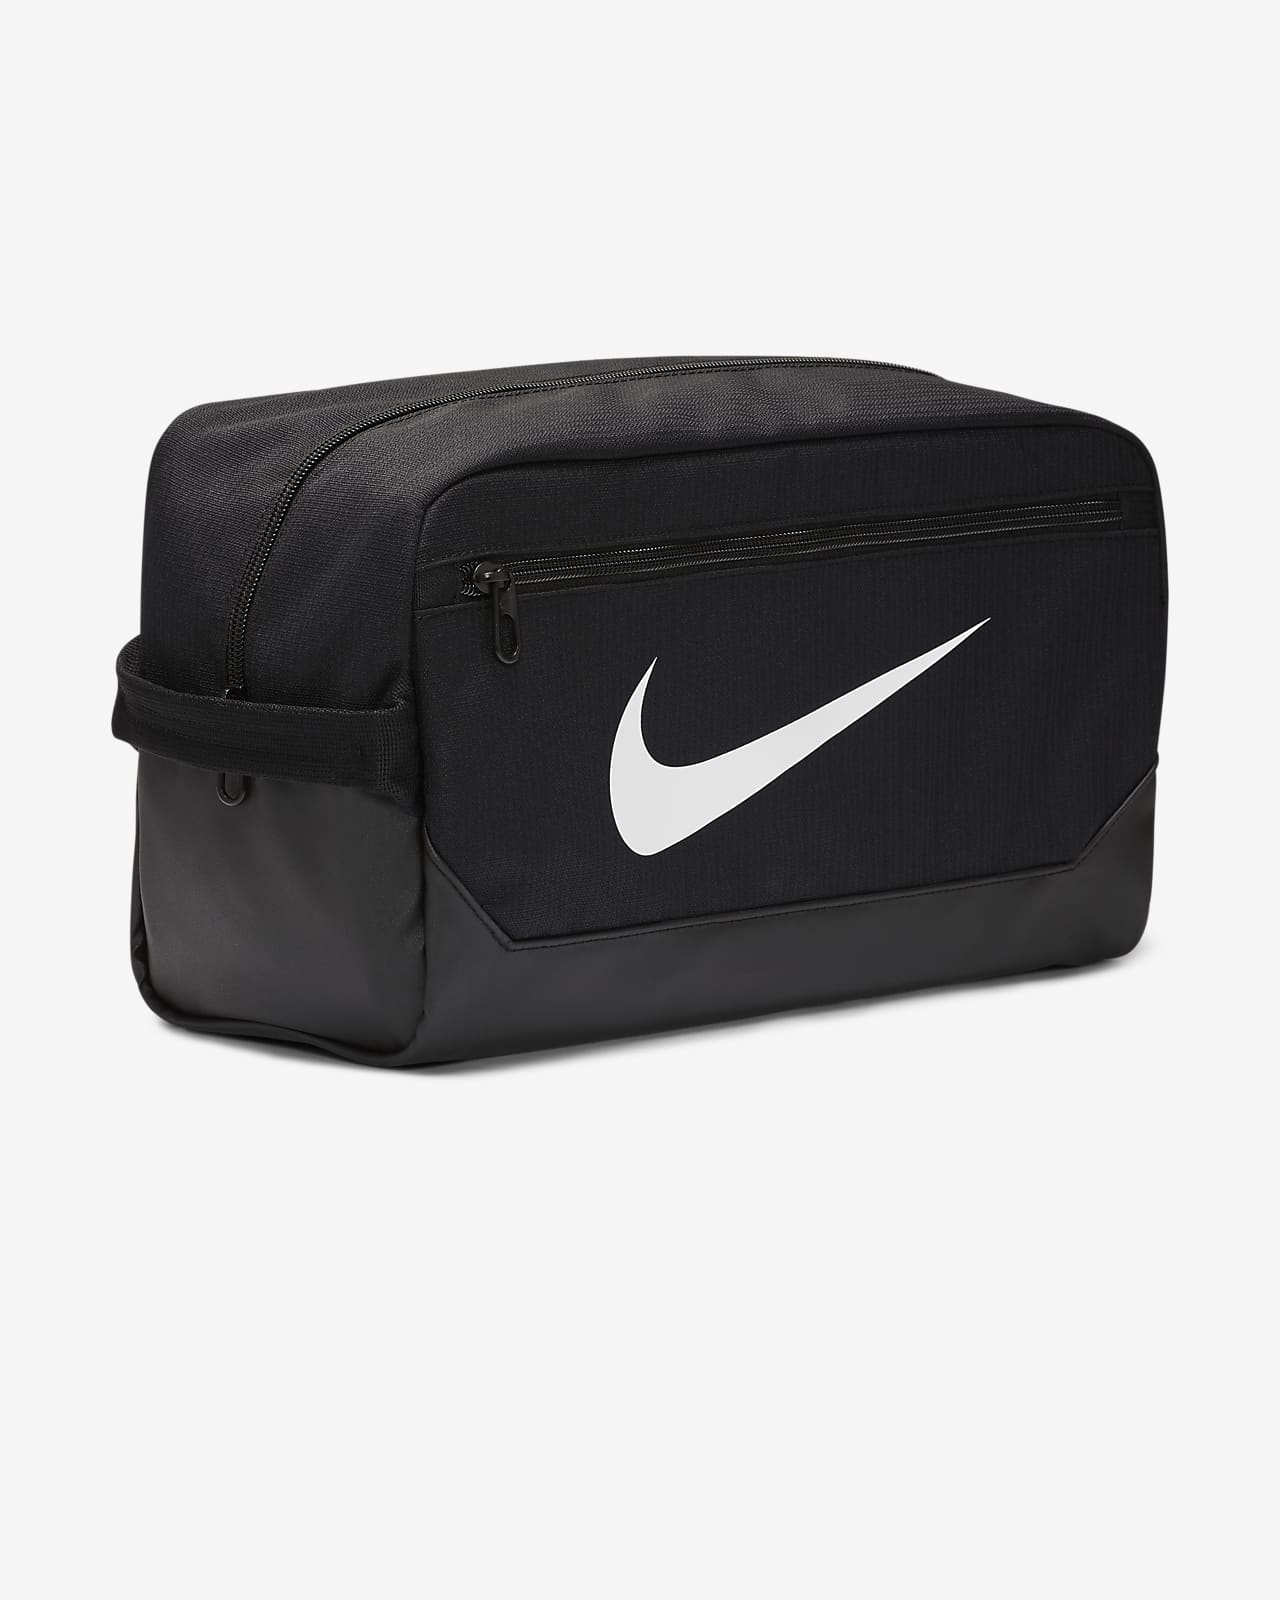 Nike Premium Shoe Box Orange White Sneaker Shoes Travel Bag Zip DA7337 870  - NEW | eBay